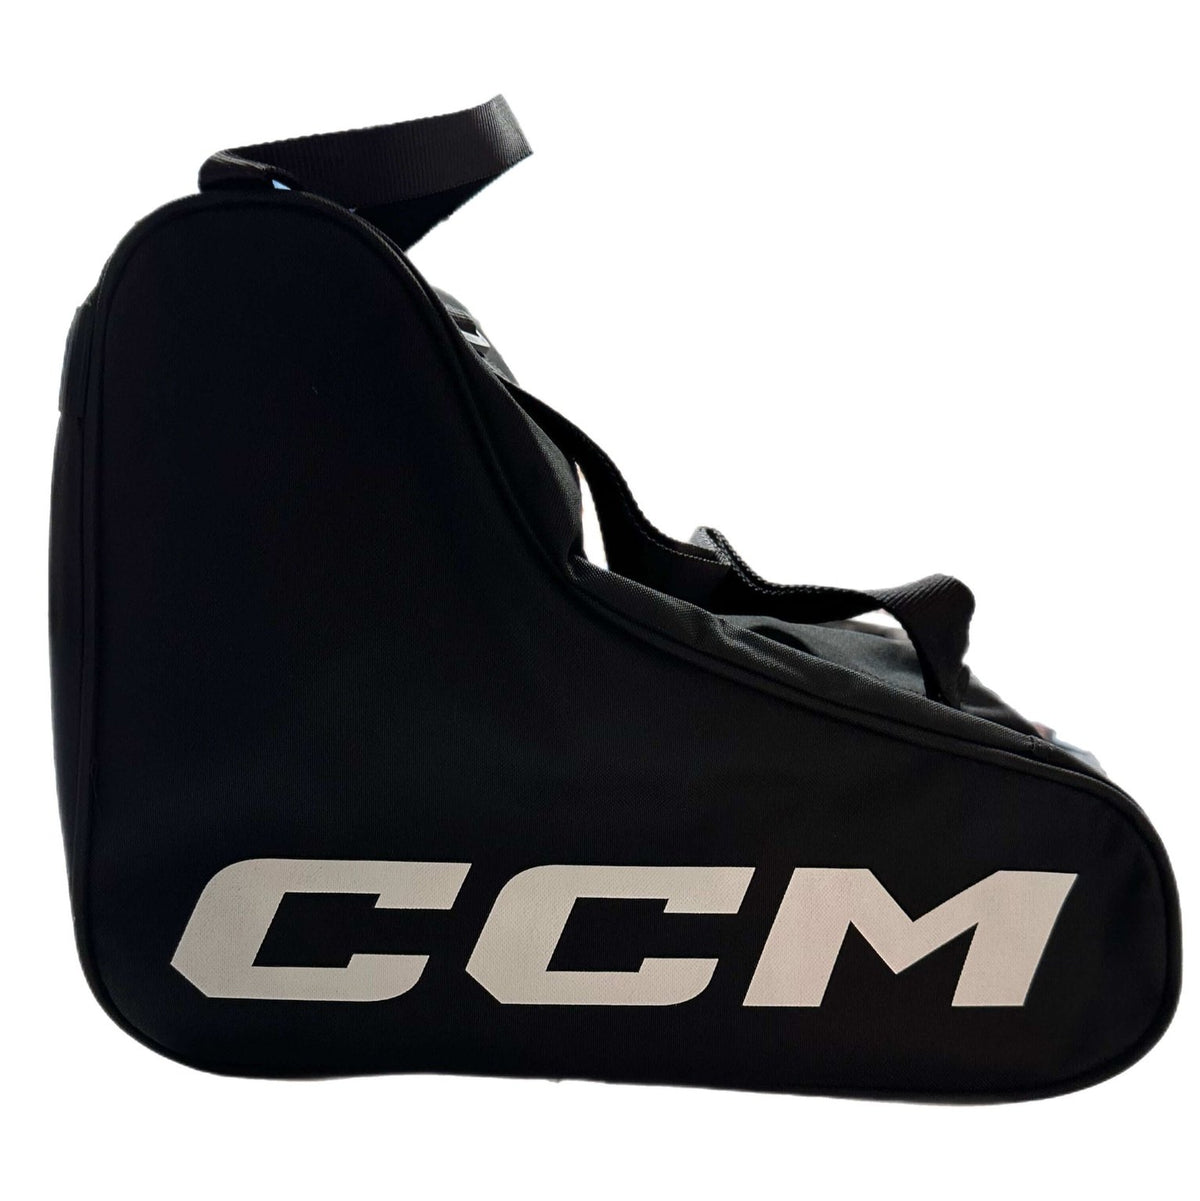 CCM Black Skate Bag